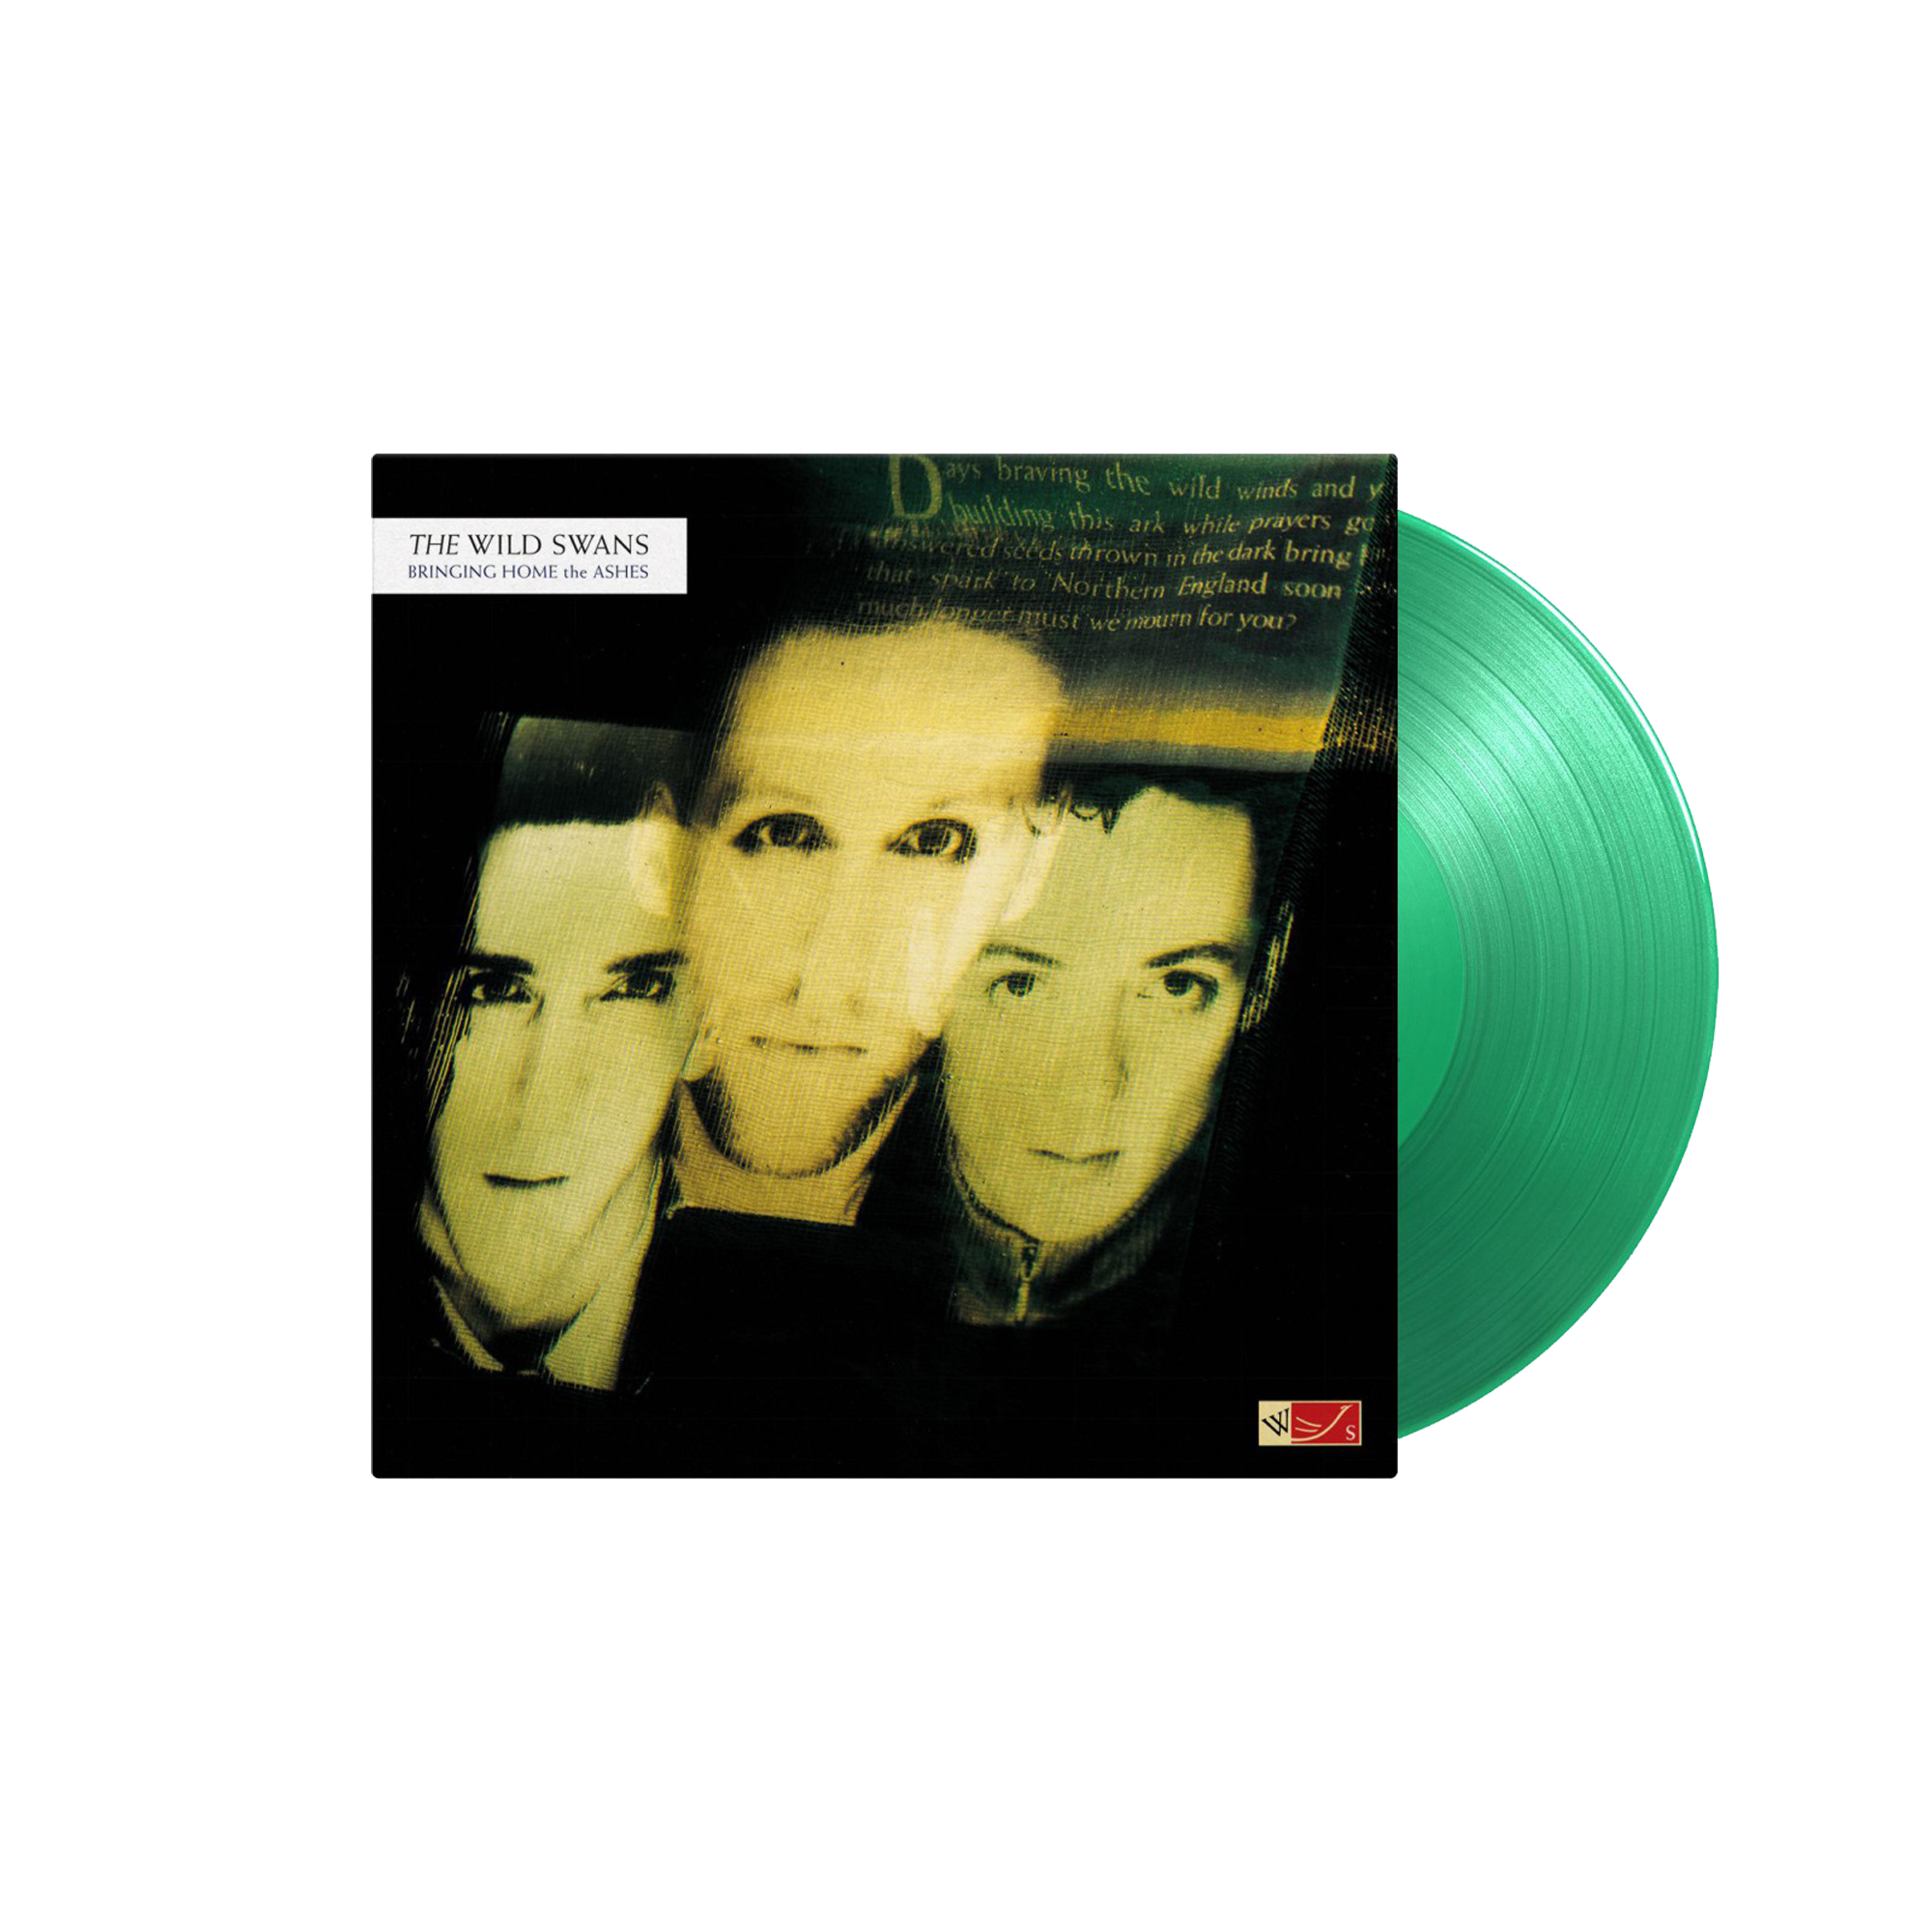 Bringing Home The Ashes: Translucent Green Vinyl LP